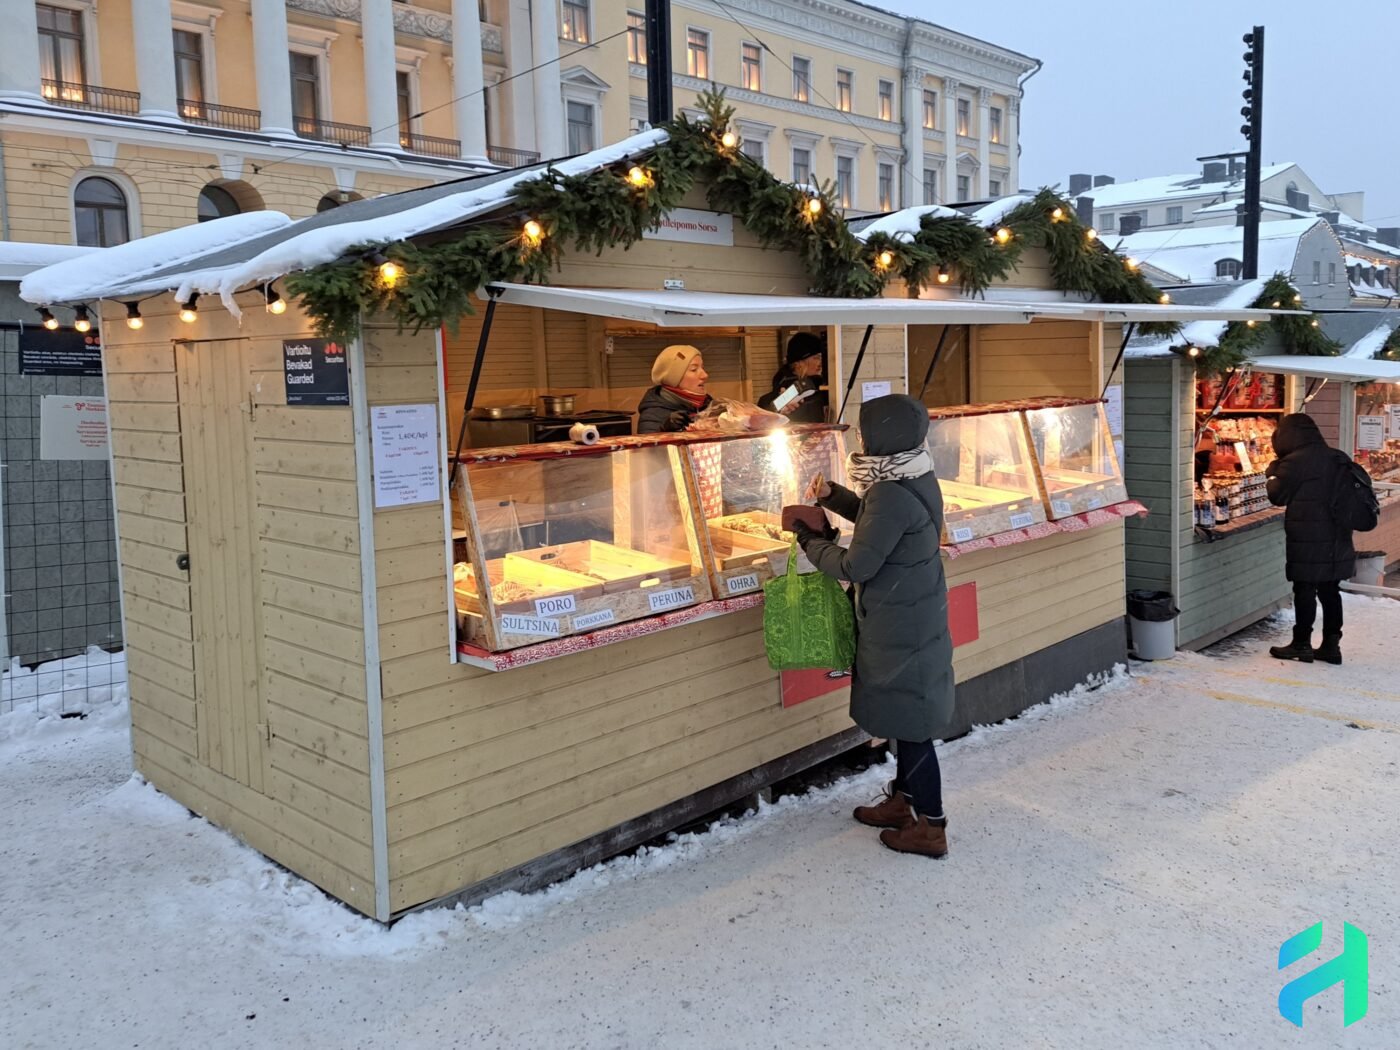 Helsinki Christmas Market stall